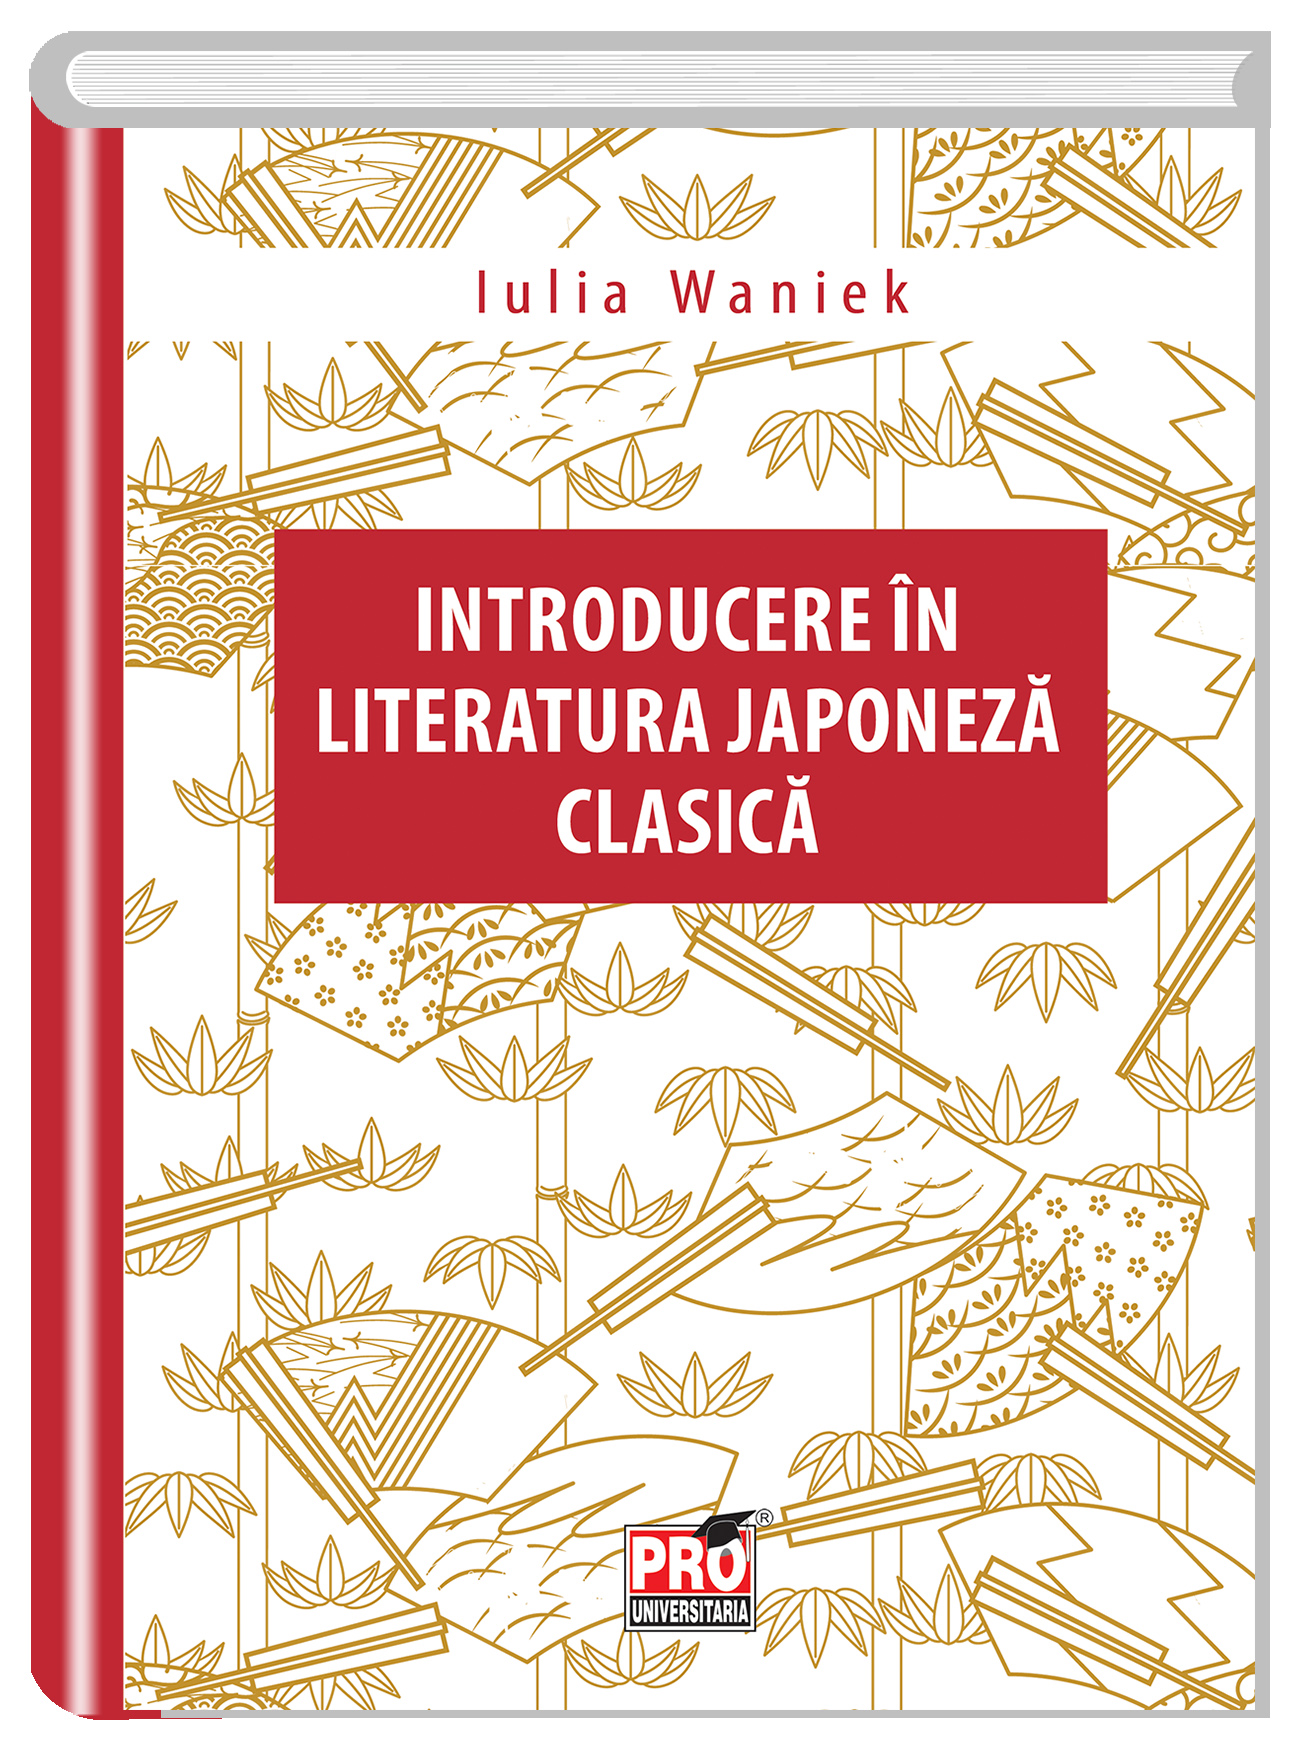 Introducere in lieratura japoneza clasica | Iulia Waniek